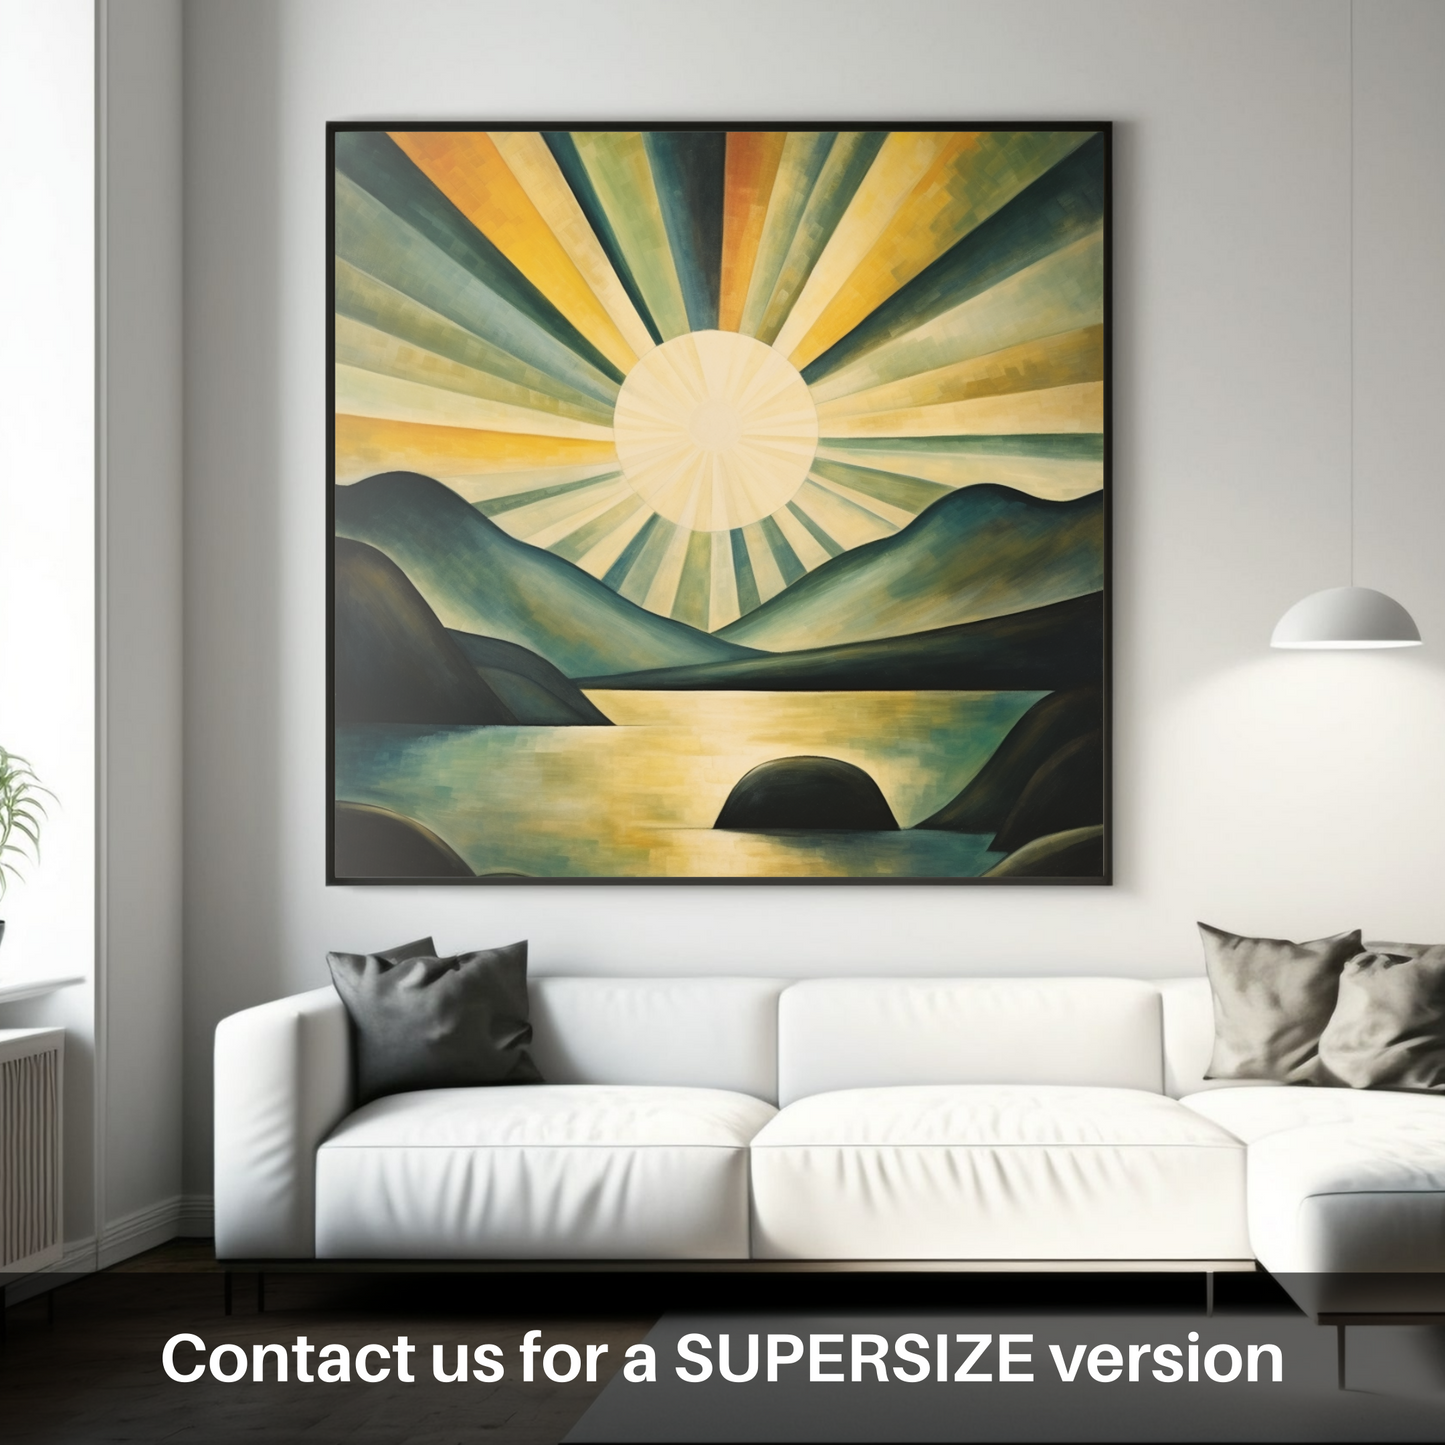 Huge supersize print of Sunbeams on Loch Lomond